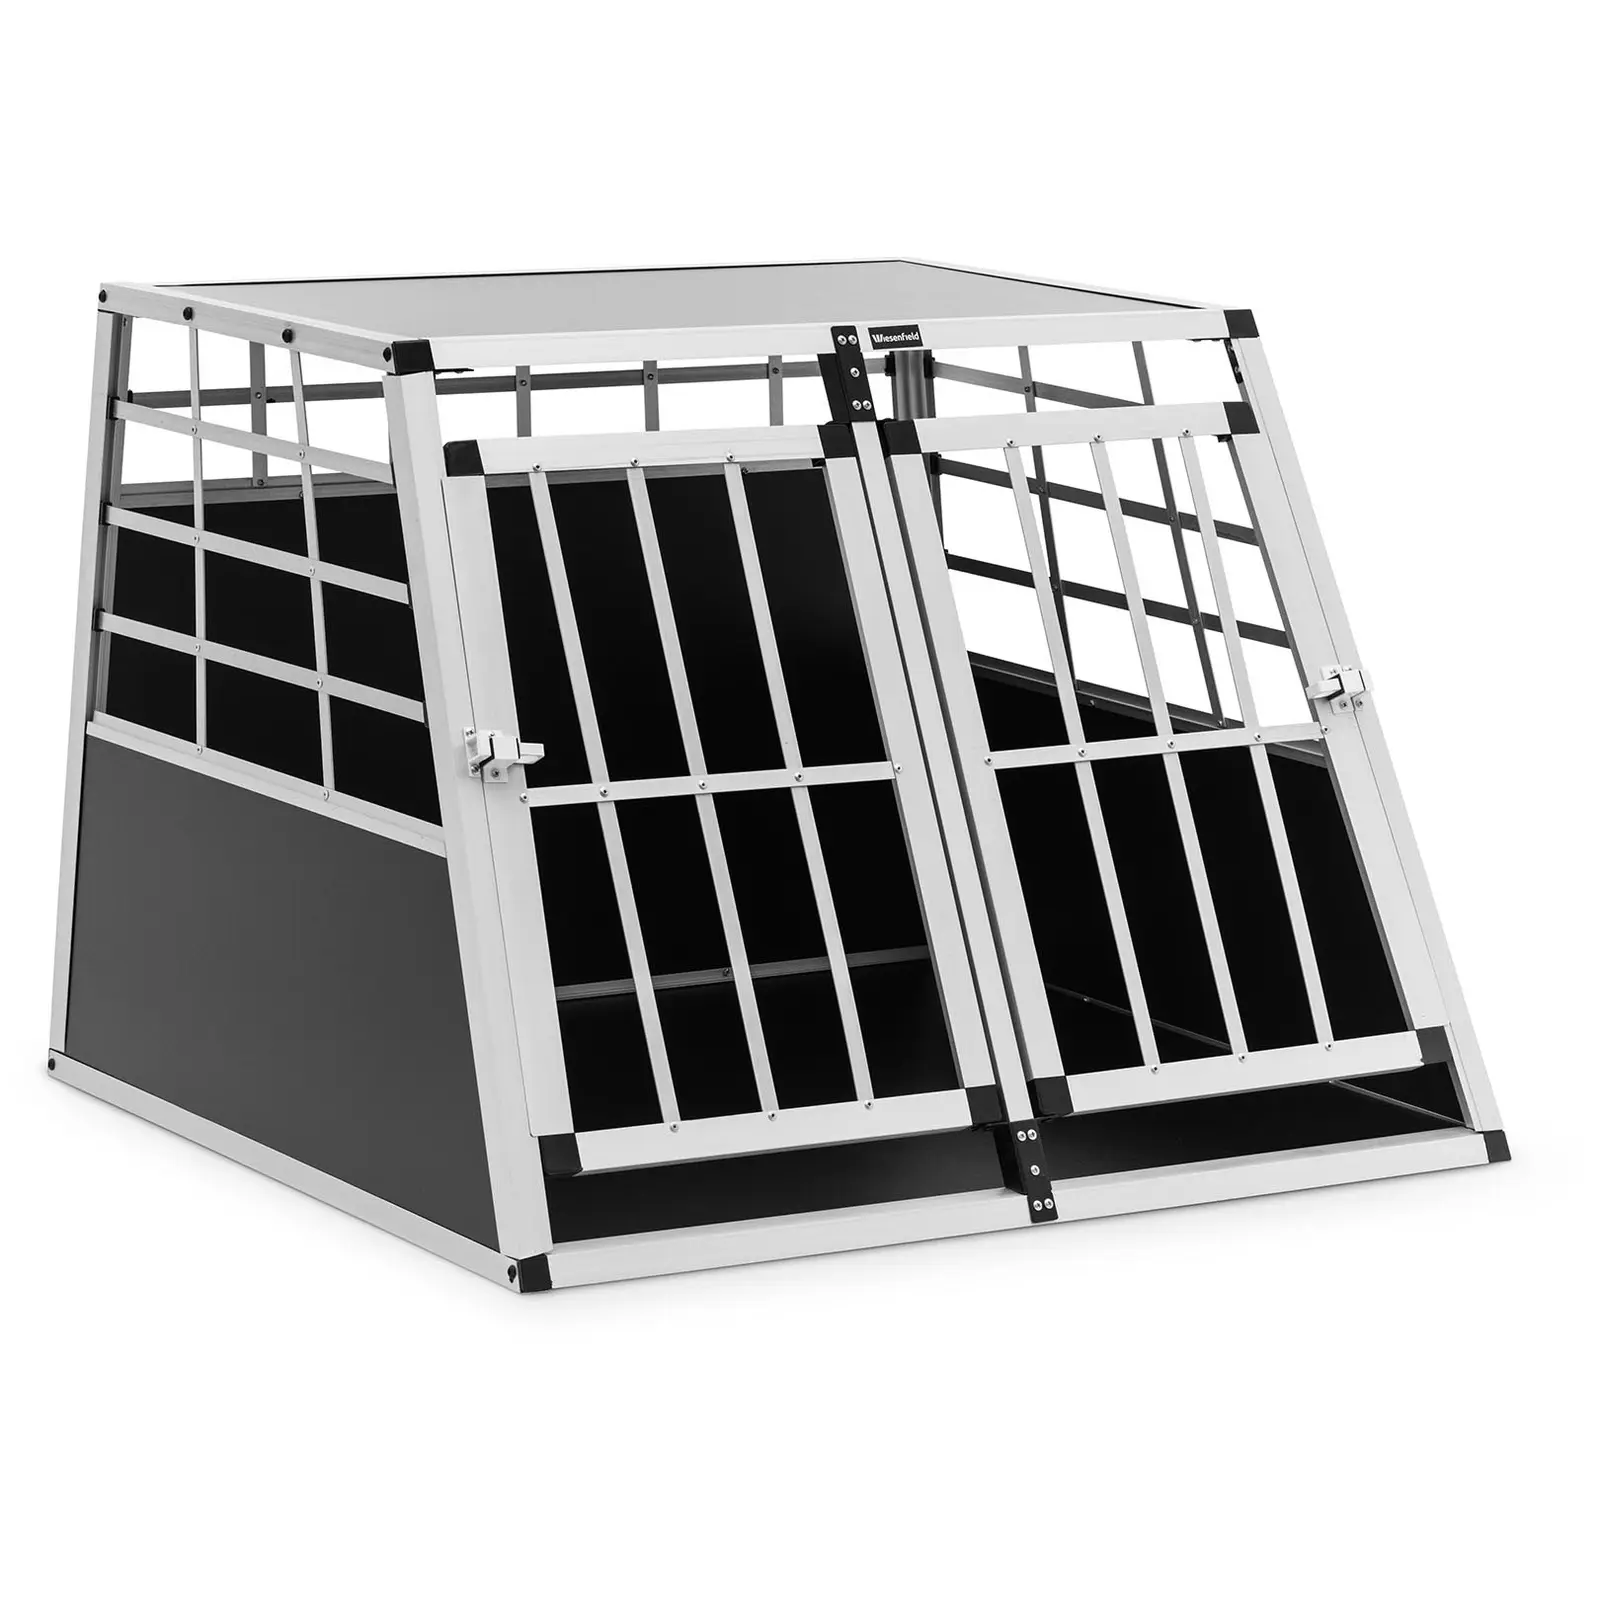 Dog Crate - Aluminium - Trapezoid shape - 85 x 95 x 69 cm